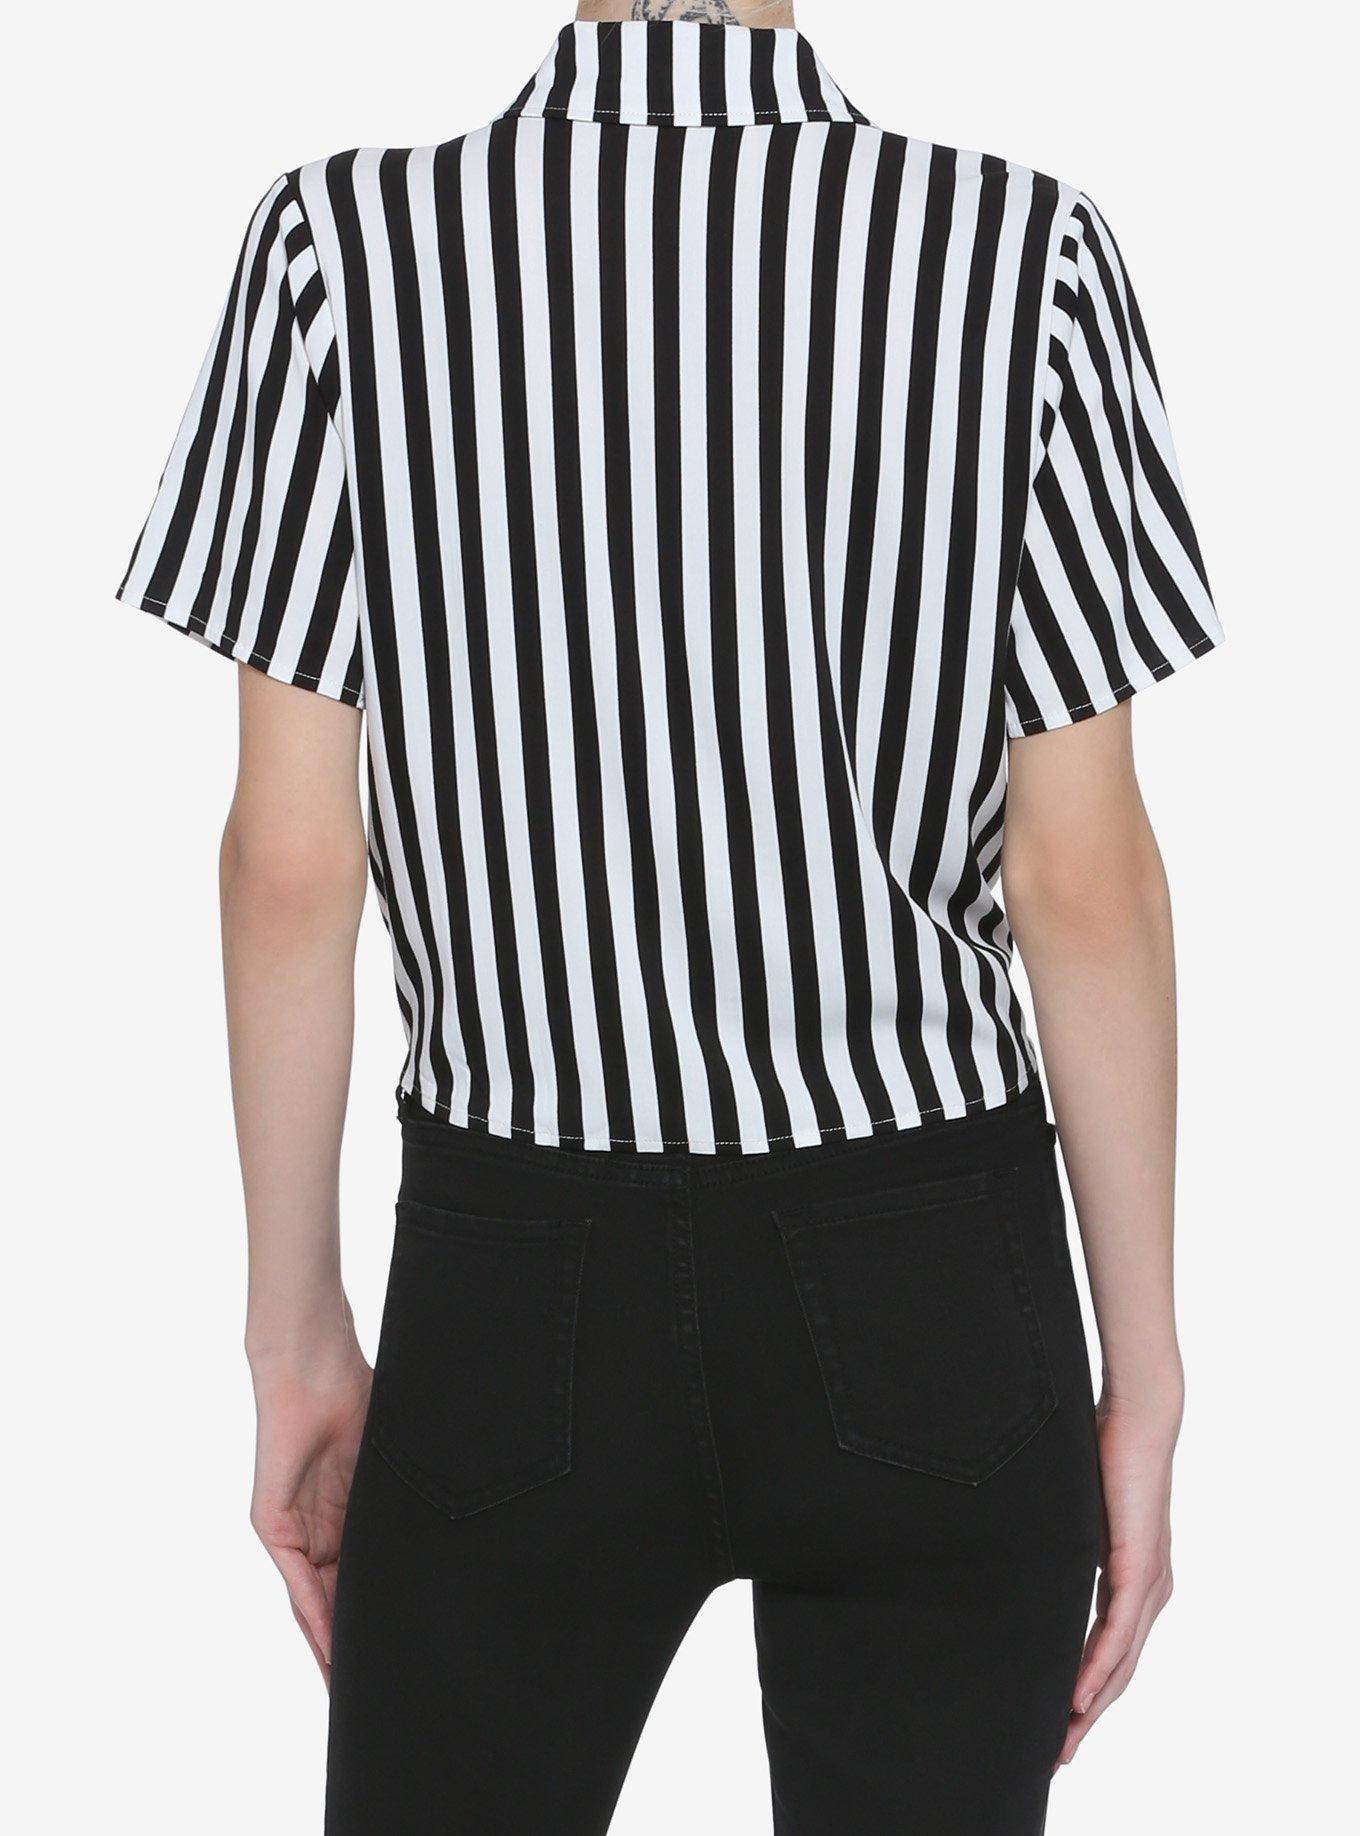 Black & White Stripe Tie-Front Girls Woven Button-Up, STRIPE-BLACK WHITE, alternate